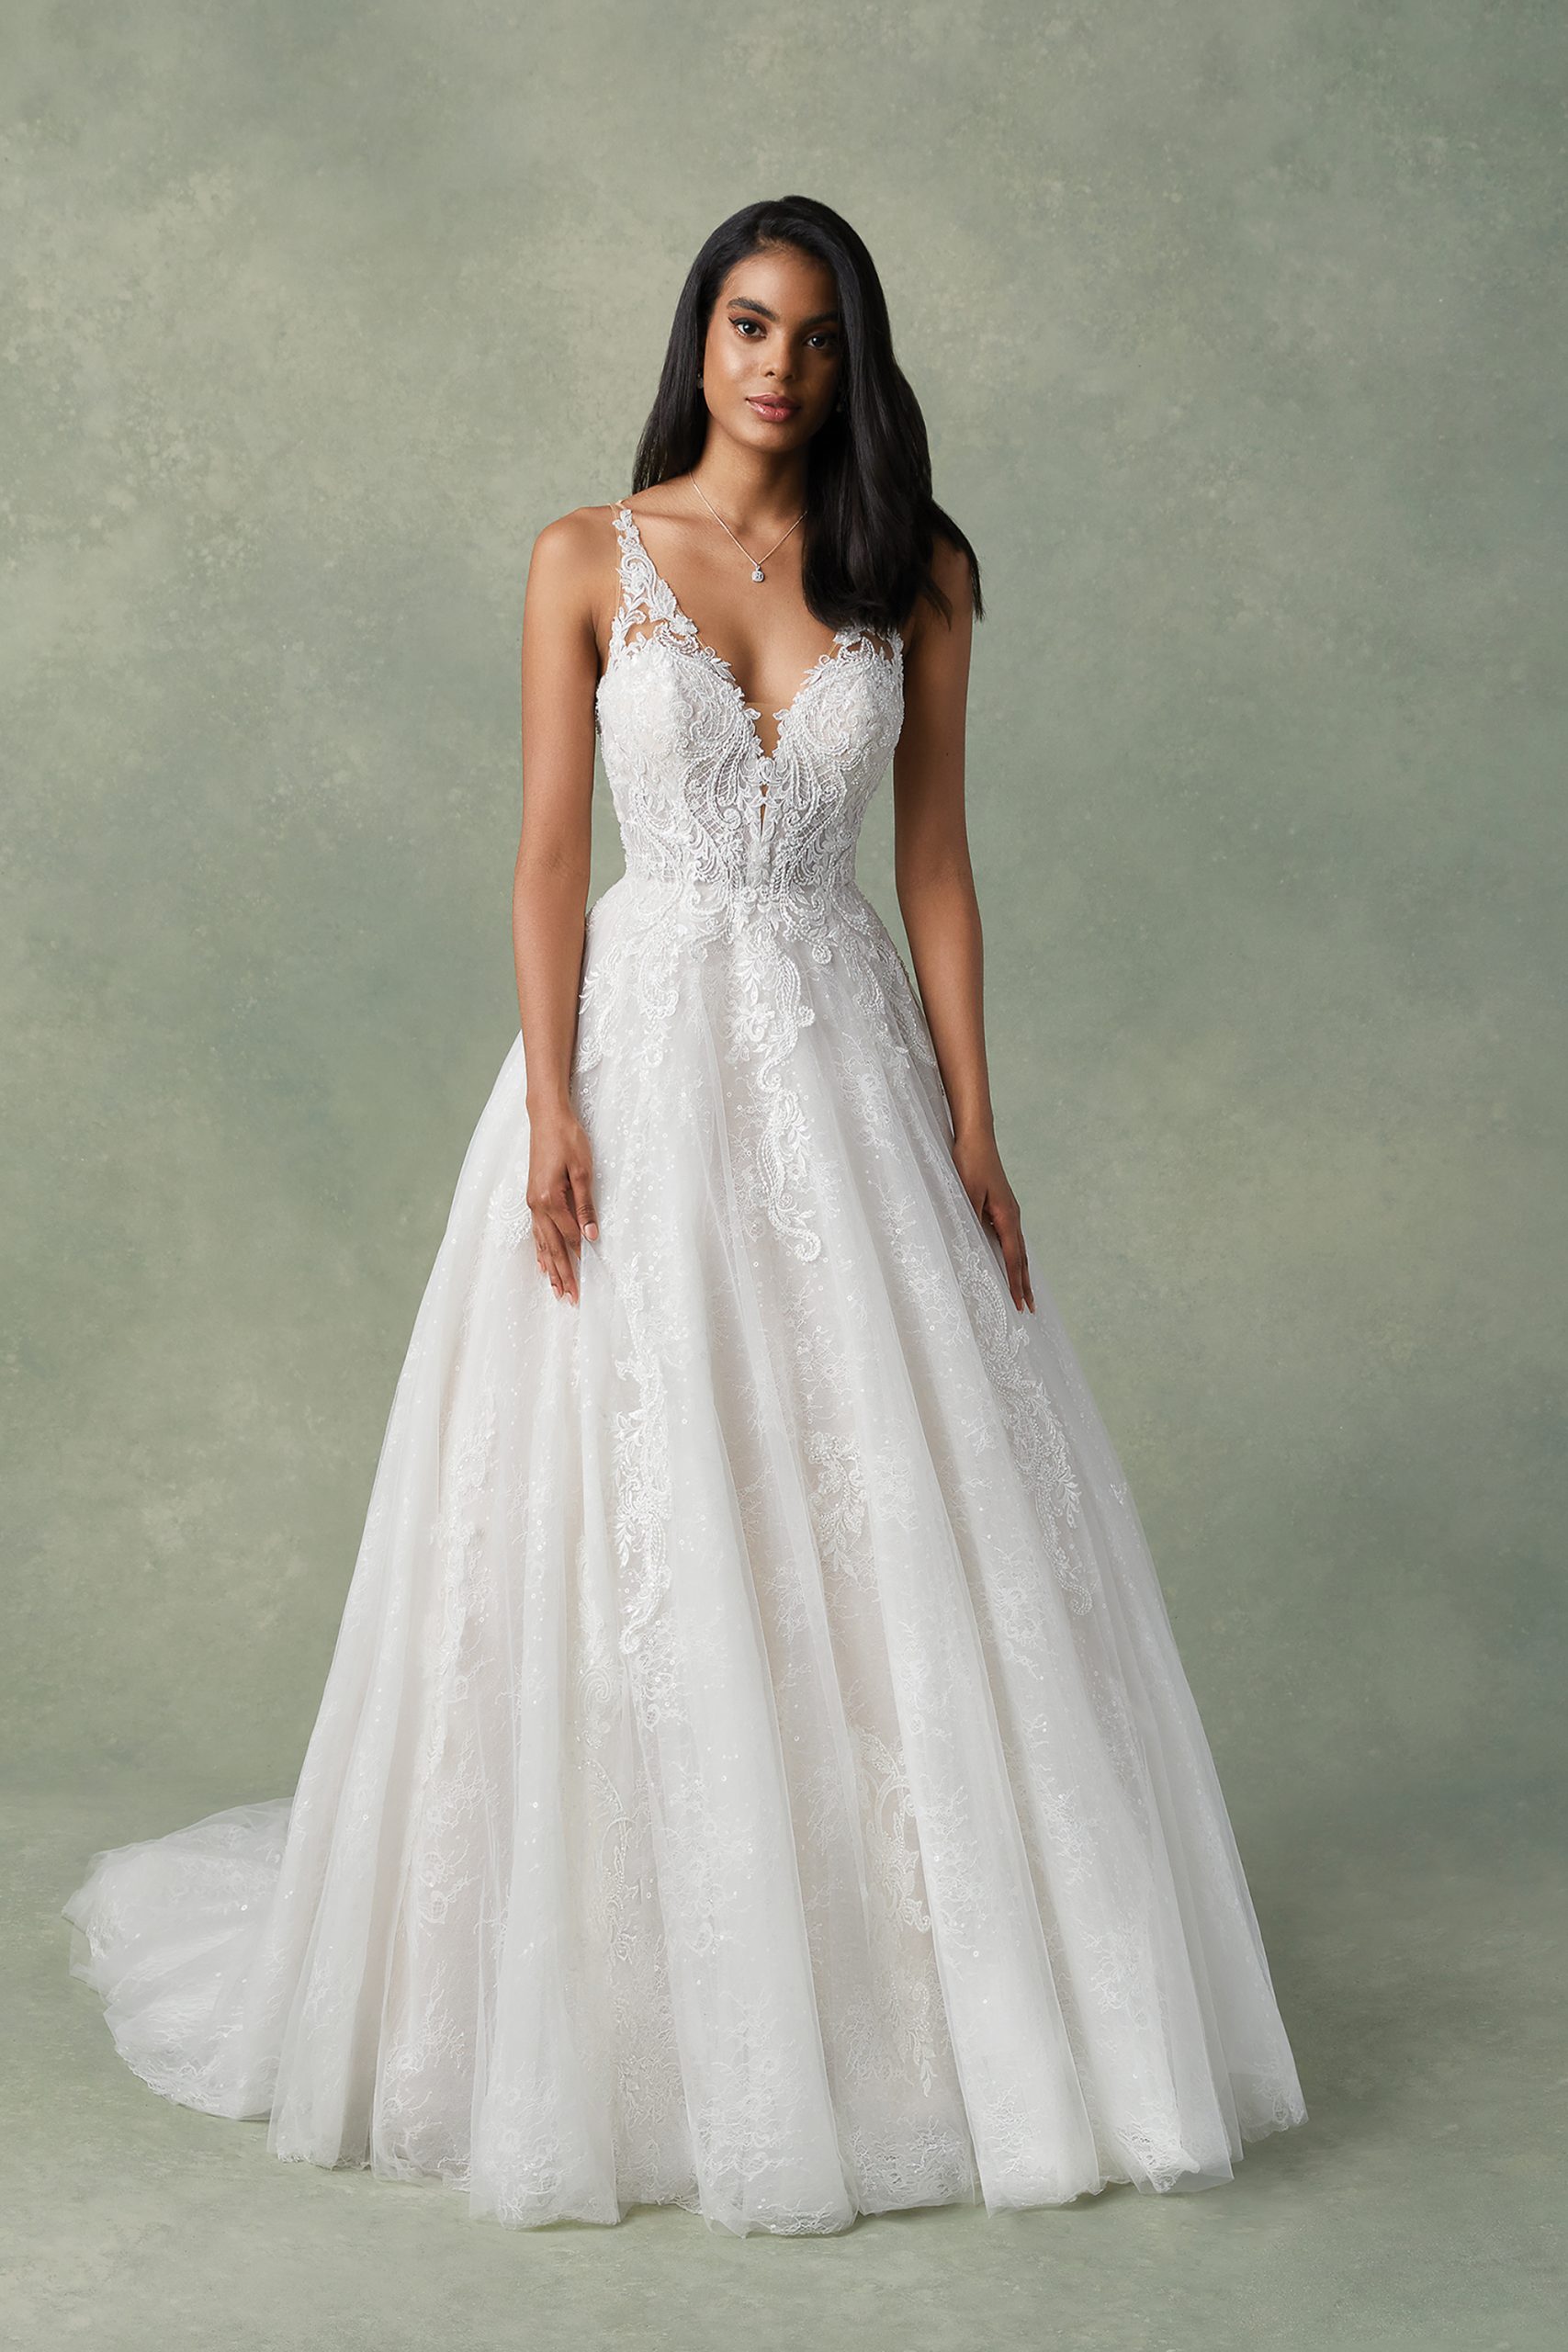 http://blog.preownedweddingdresses.com/wp-content/uploads/2016/10/Justin-Alexander-Felicia-Wedding-Dress-scaled.jpeg